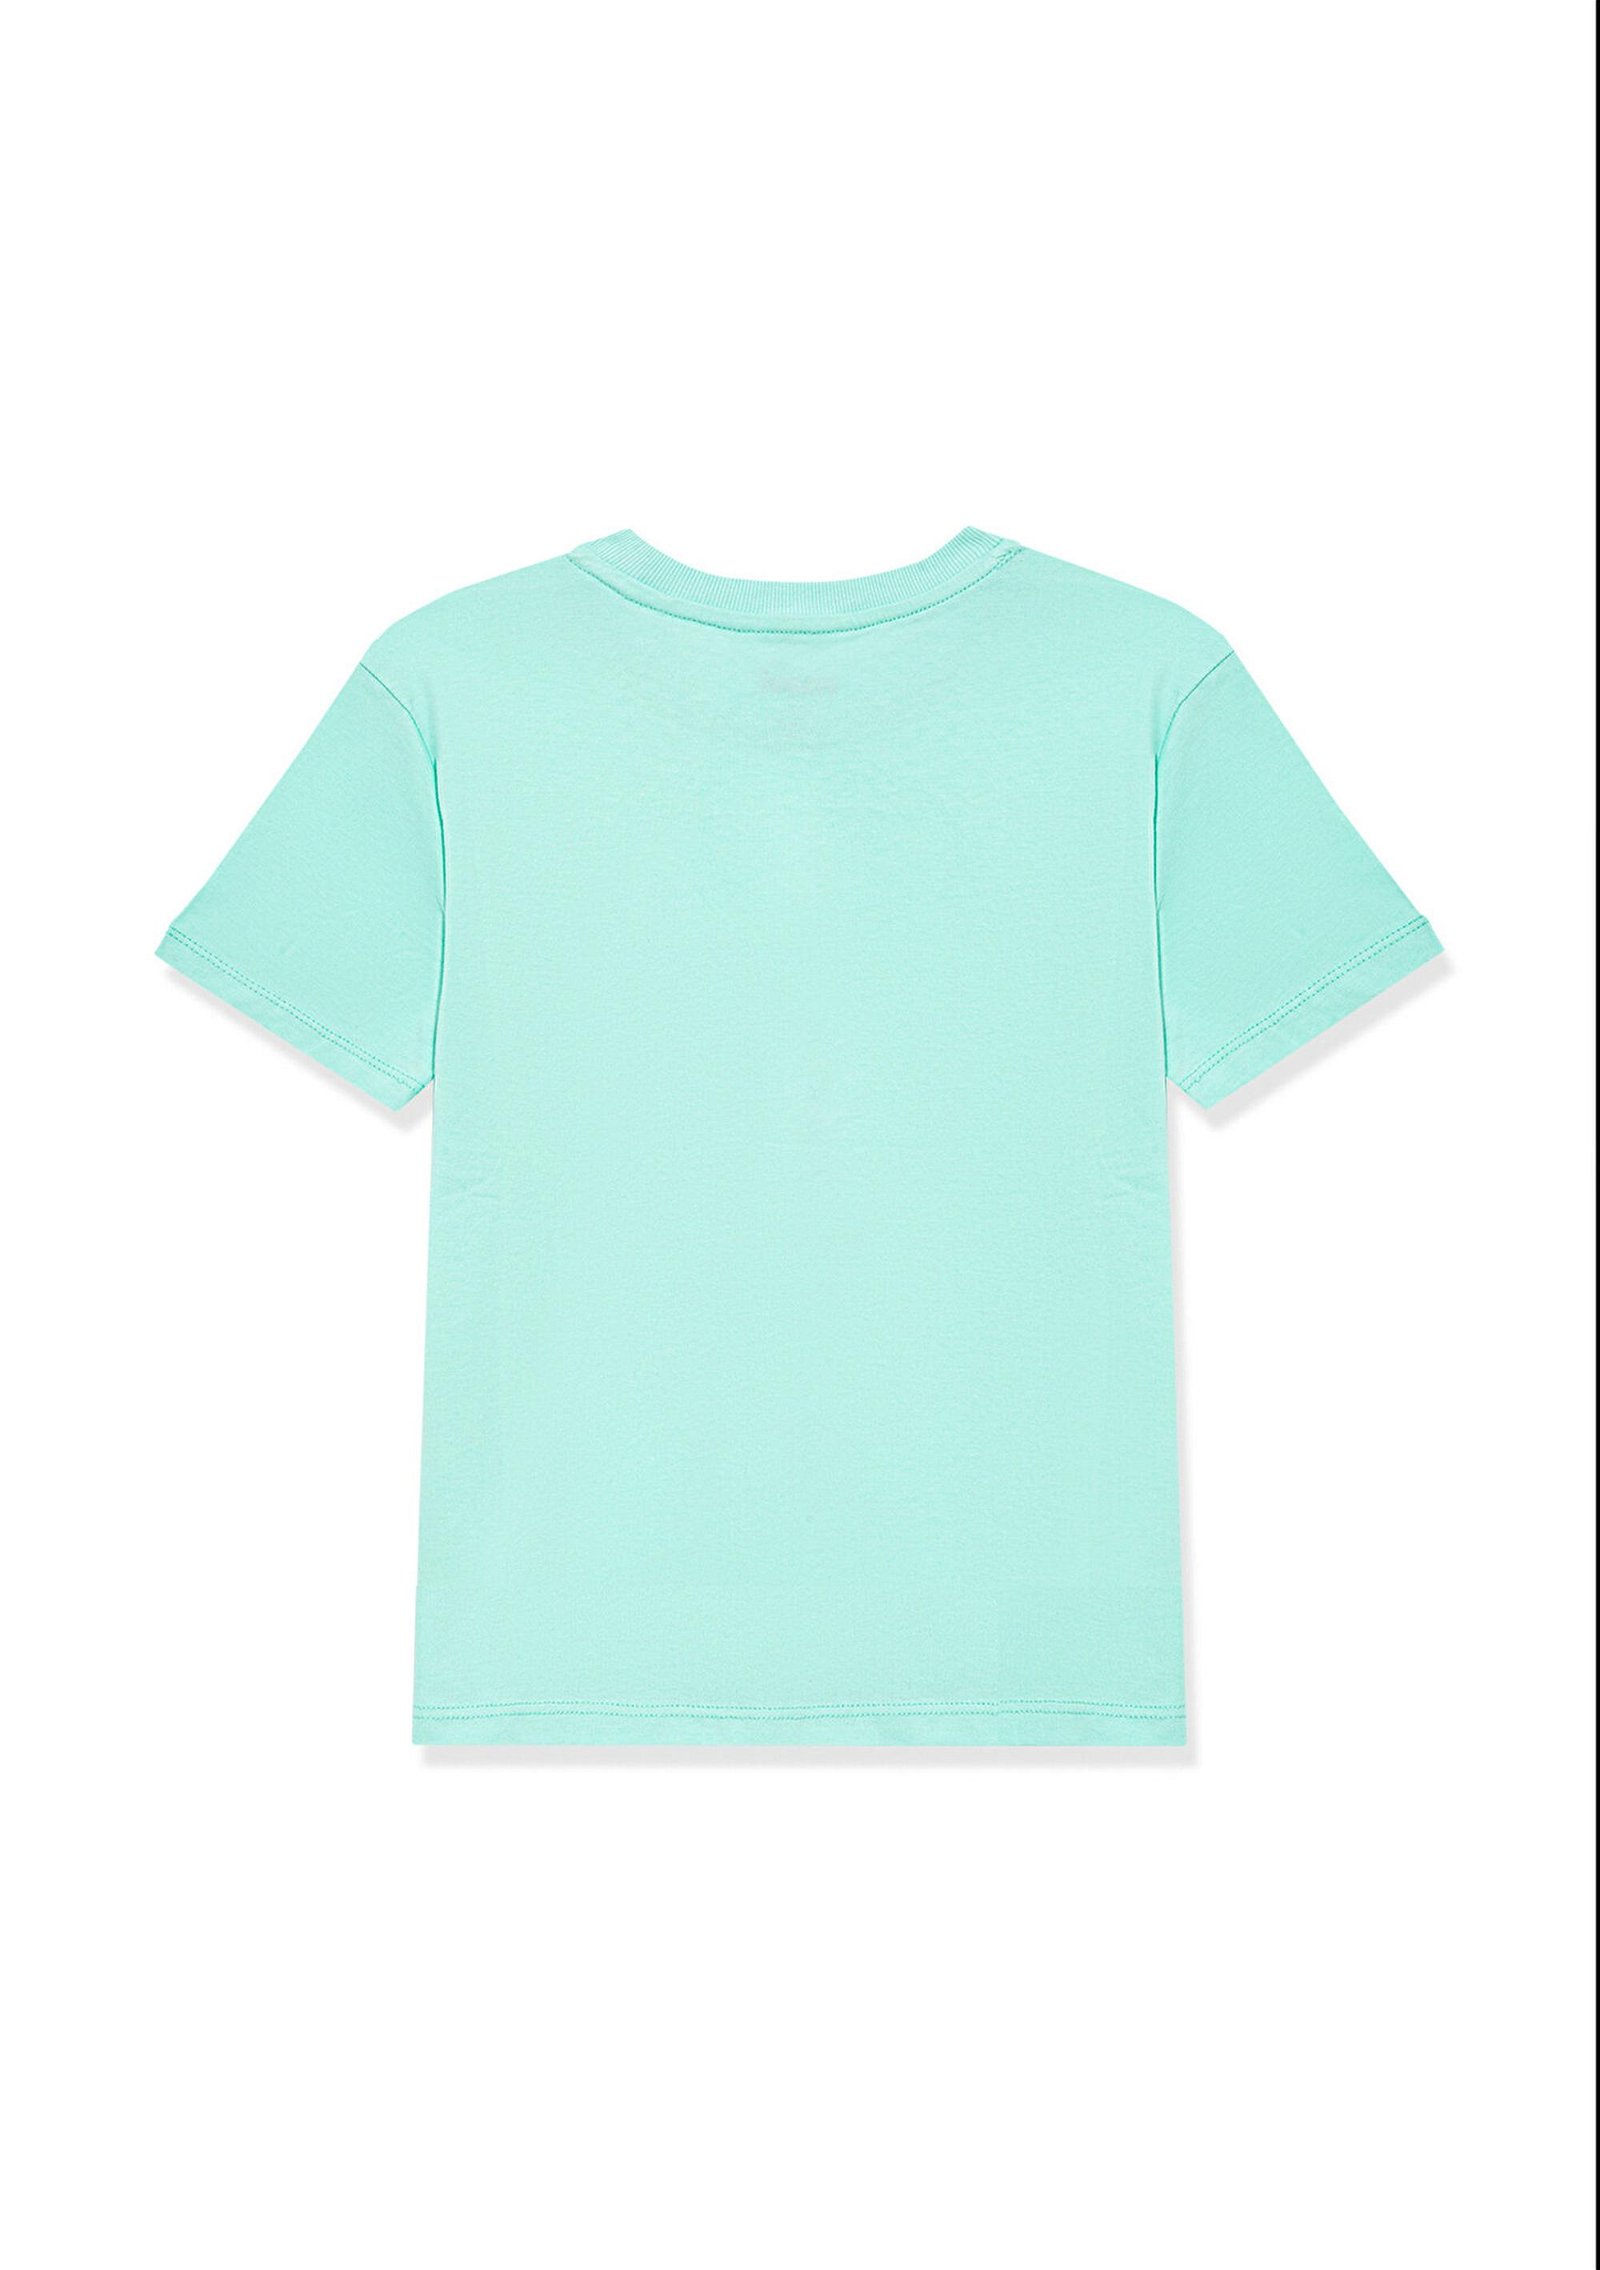 Mavi Yeşil Basic Tişört Regular Fit / Normal Kesim 7610183-71724